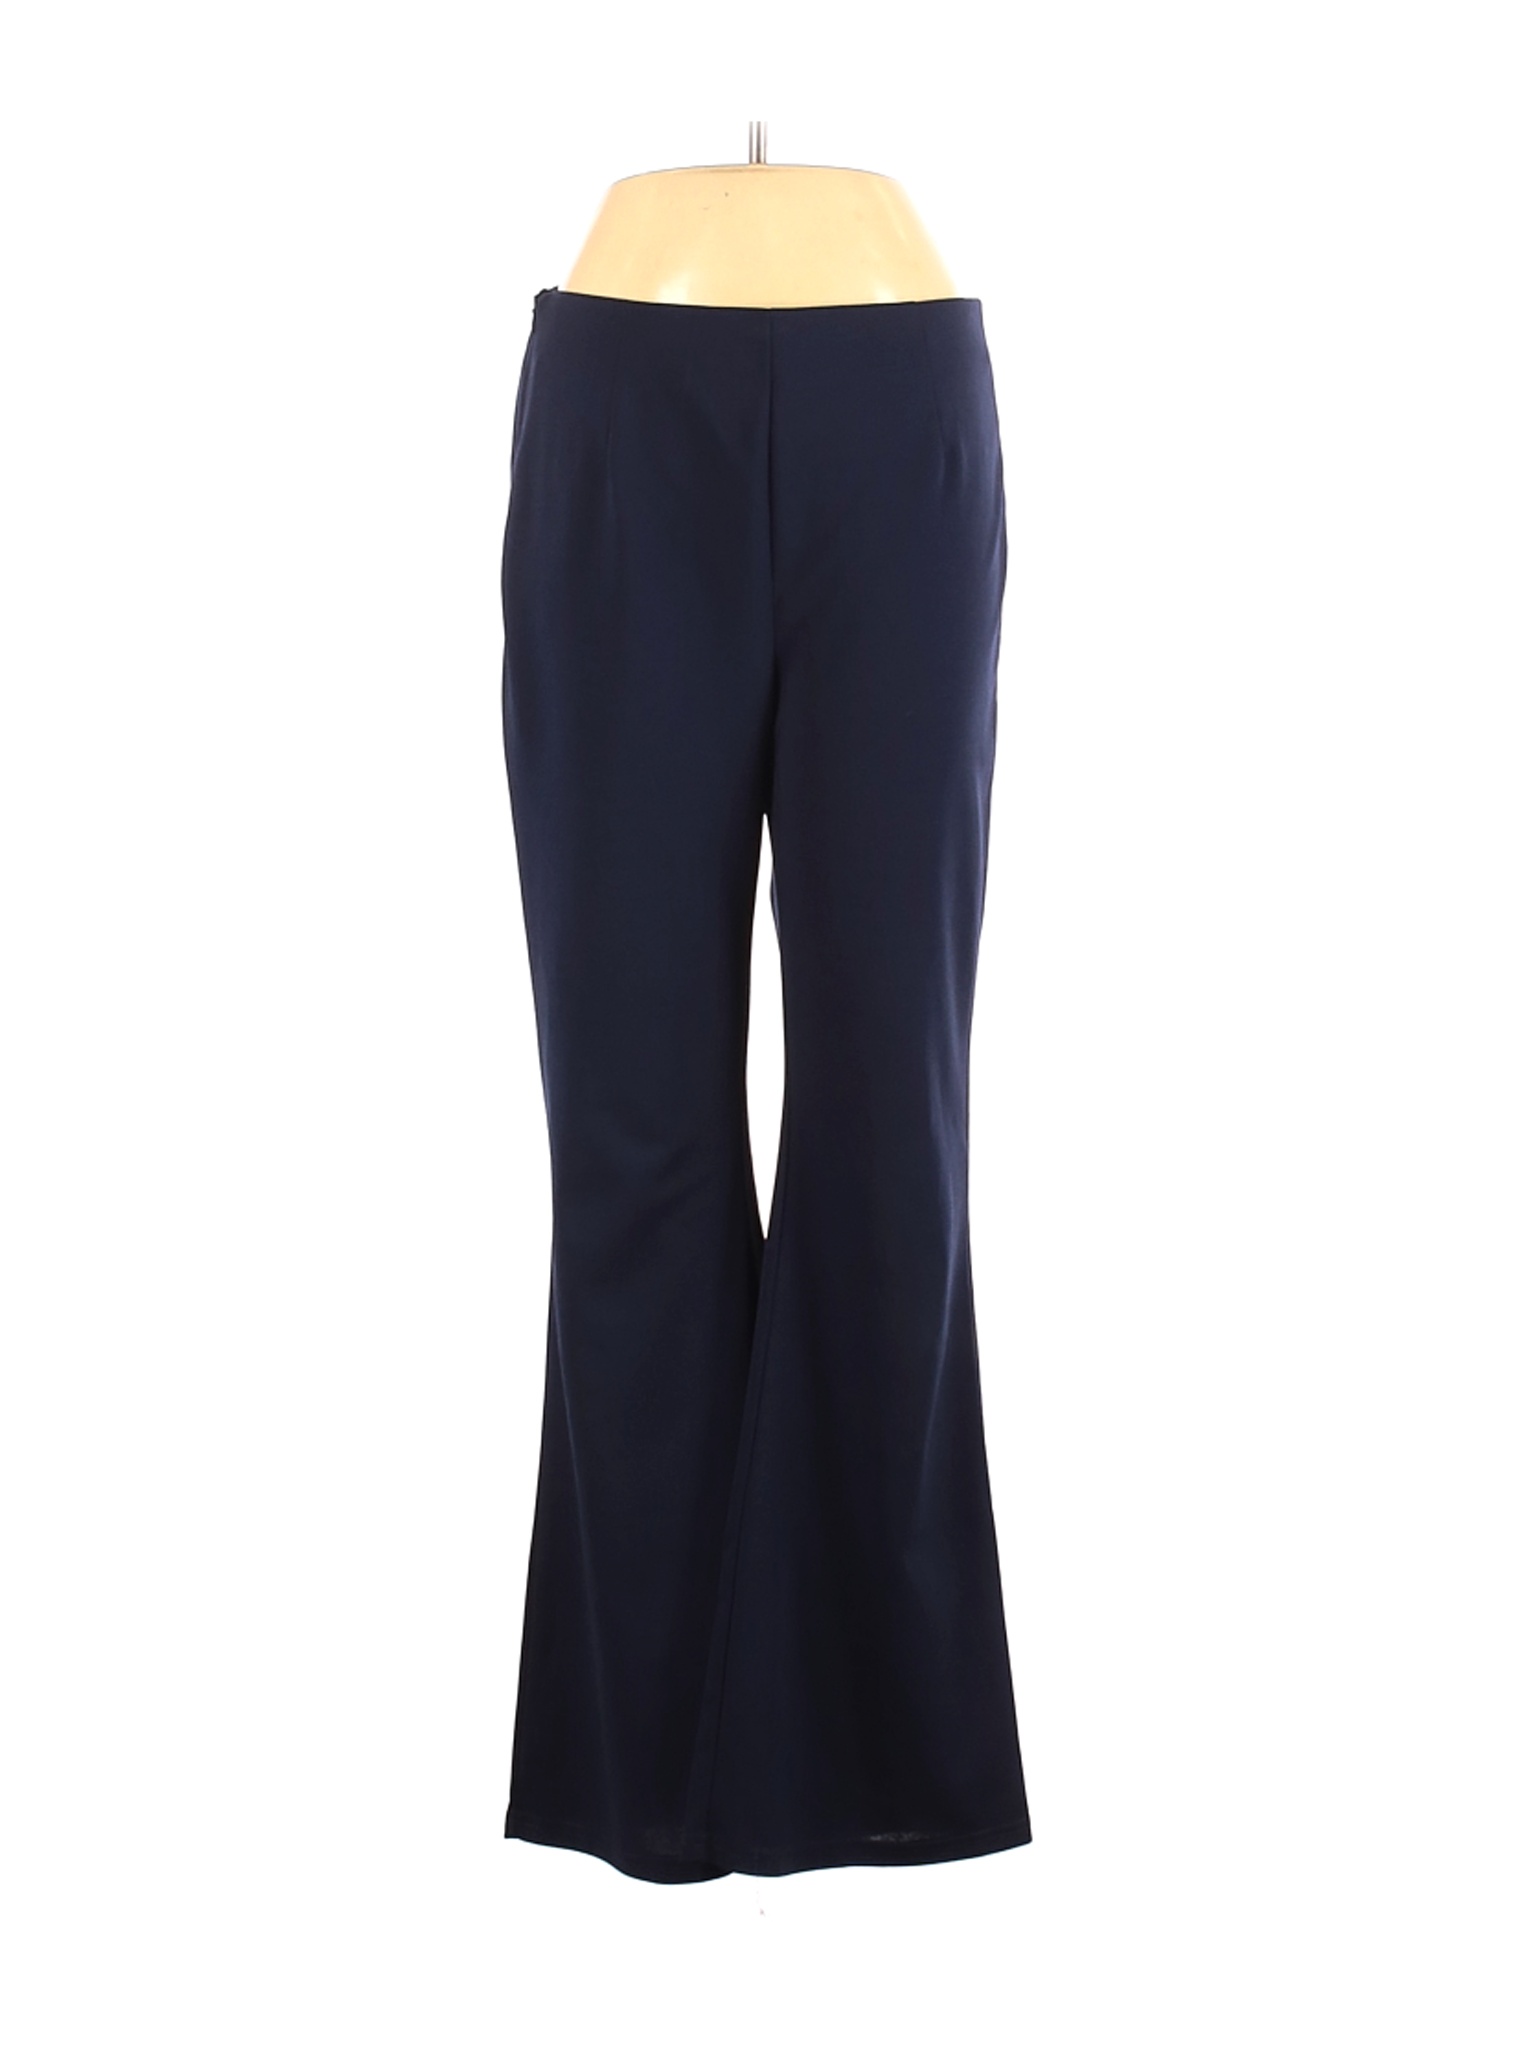 Shein Women Blue Casual Pants L | eBay